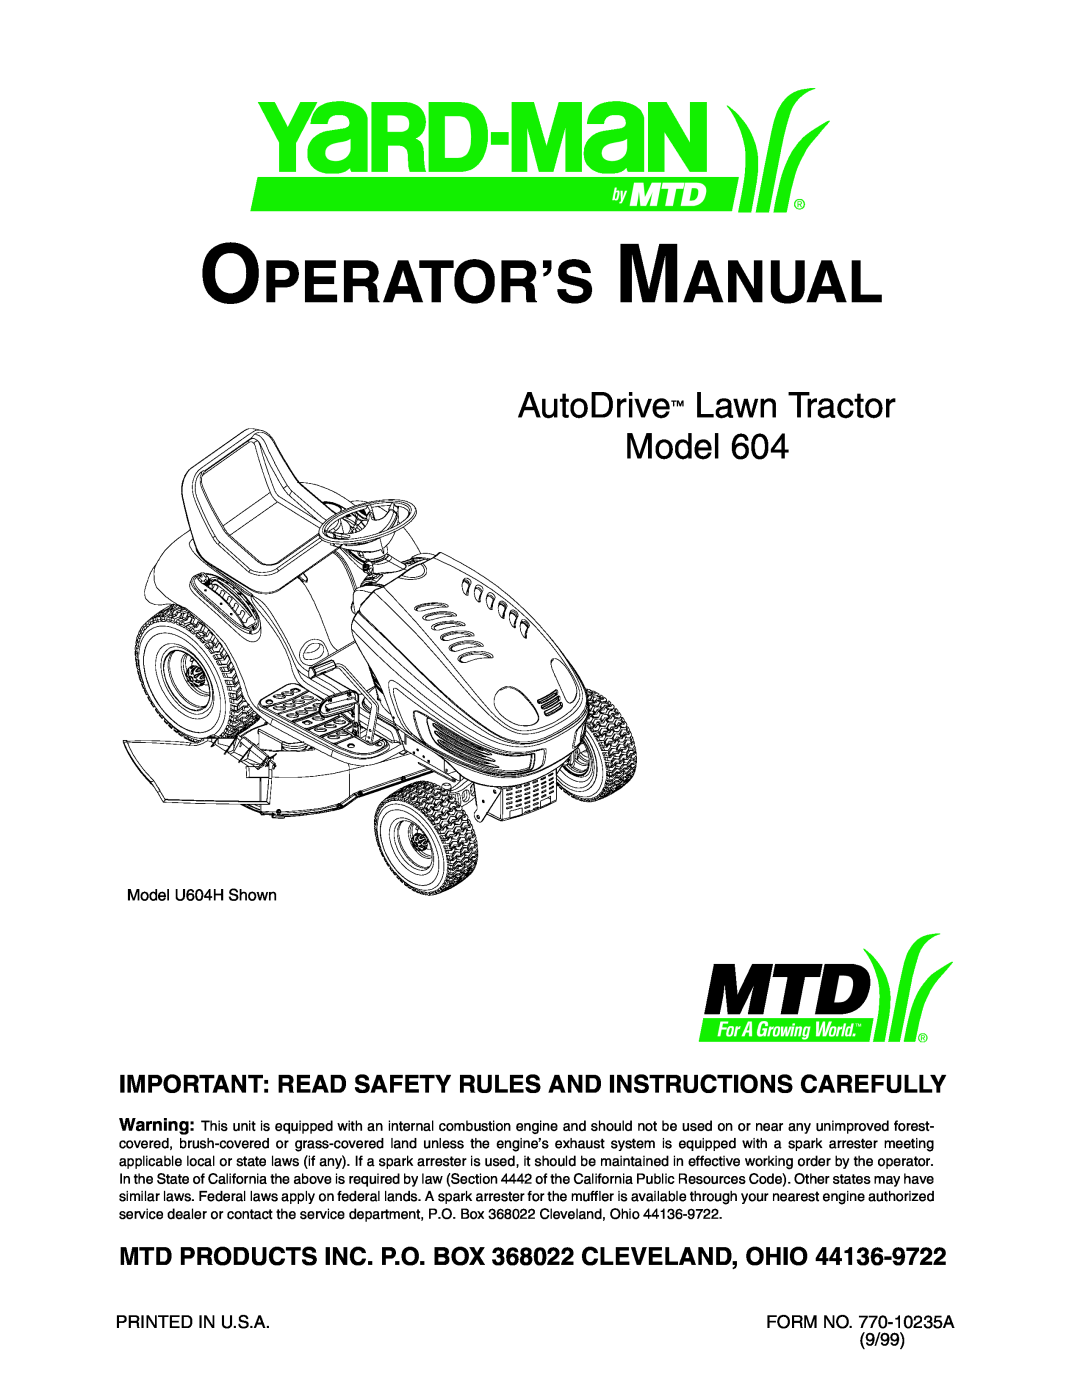 Yard-Man 604 manual MTD PRODUCTS INC. P.O. BOX 368022 CLEVELAND, OHIO, Operator’S Manual, AutoDrive Lawn Tractor Model 